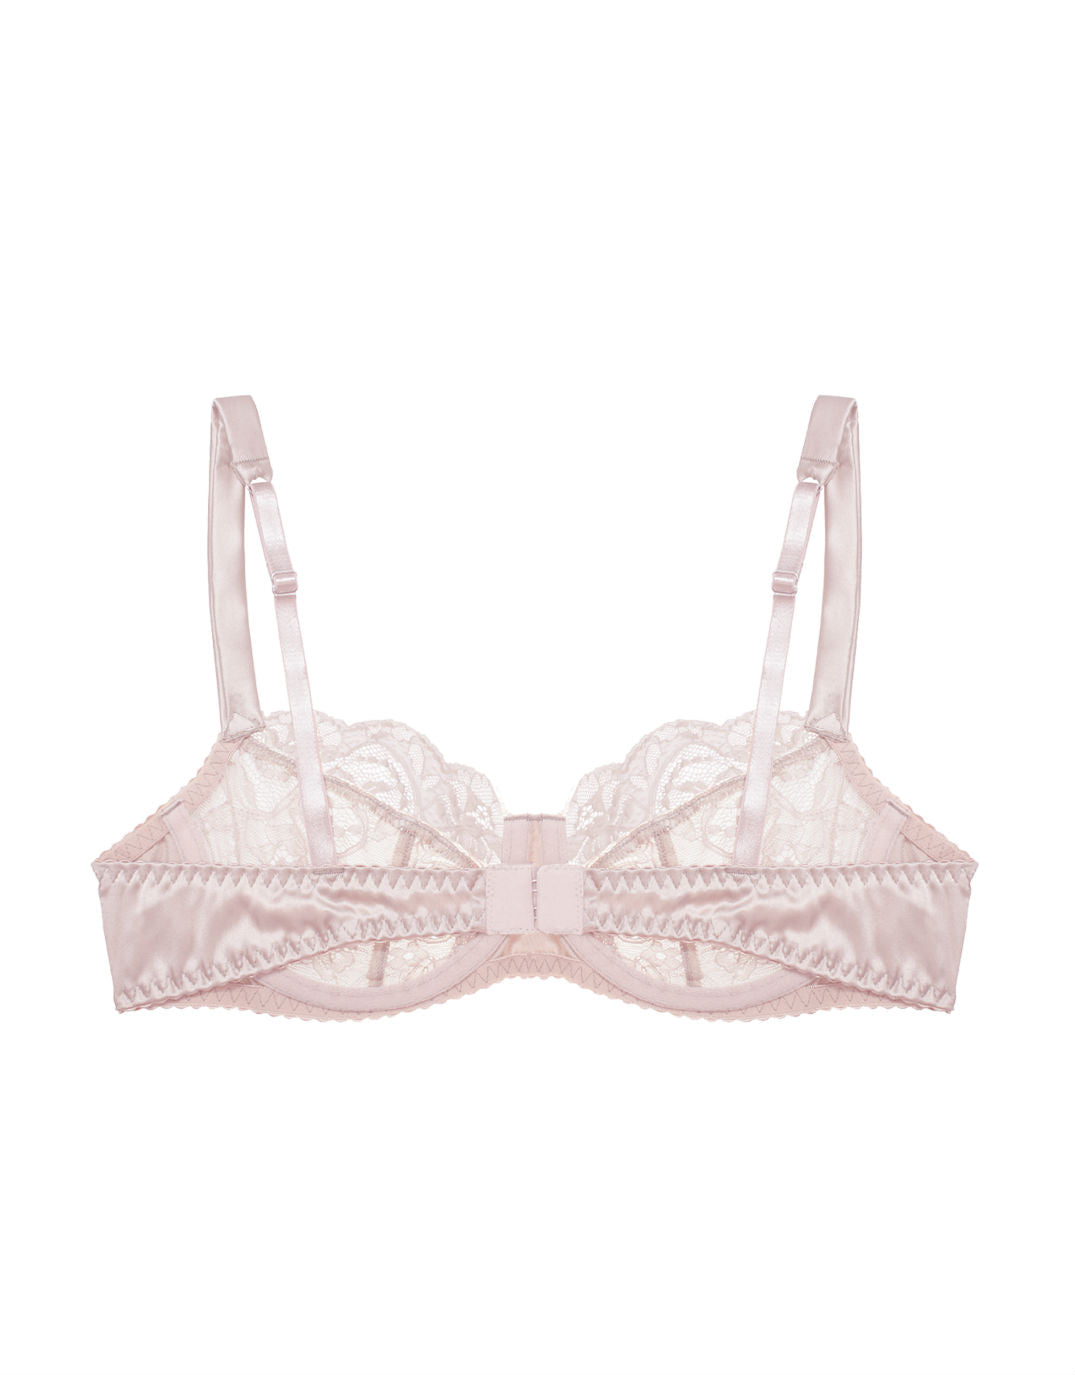 Victoria's Secret VS PINK bra Size 32 C - $10 (60% Off Retail